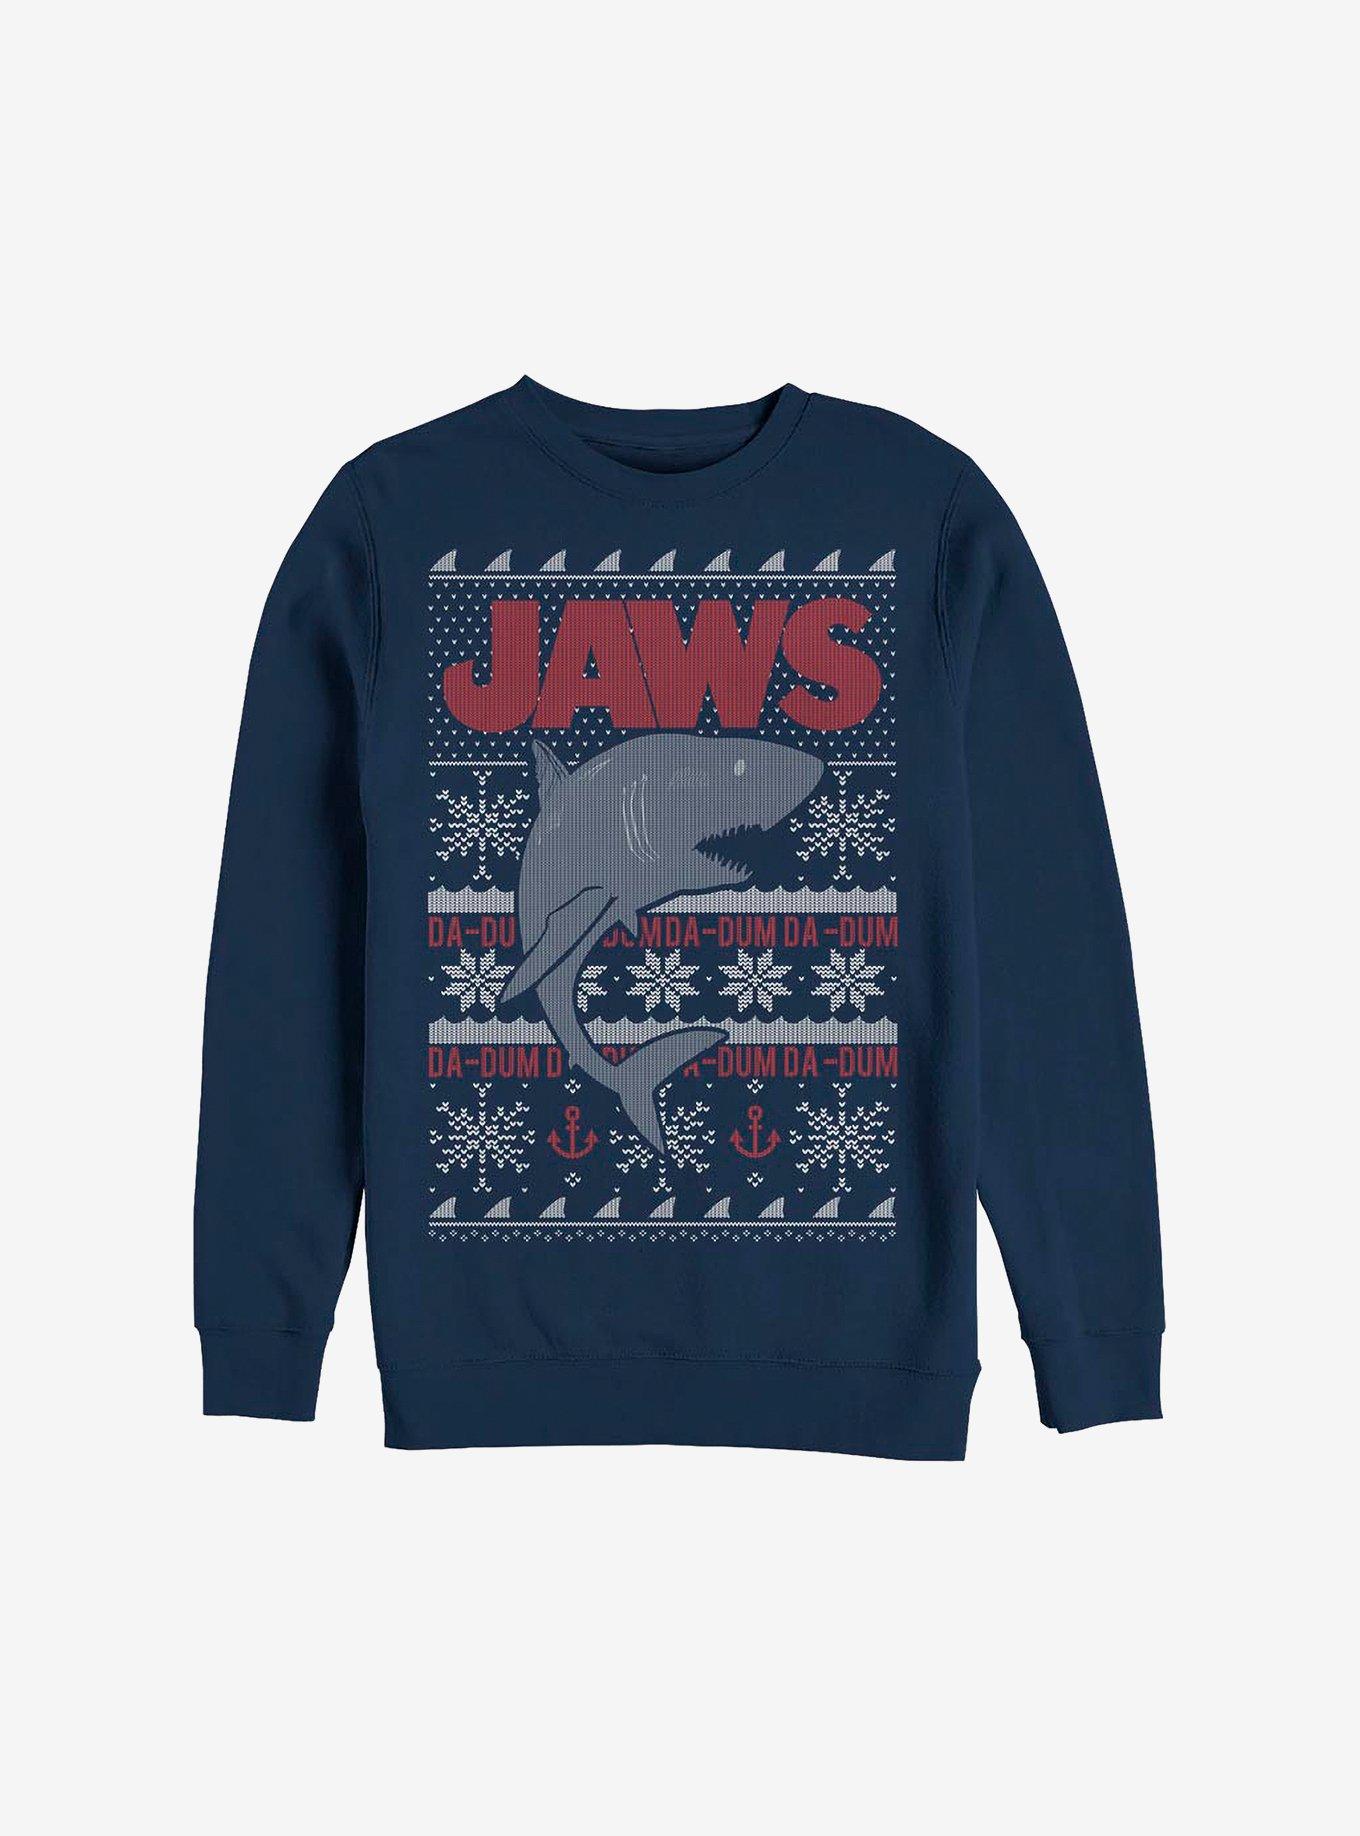 Santa Shark Jaws Inspired Ugly Knitted Christmas Sweater - Teeruto